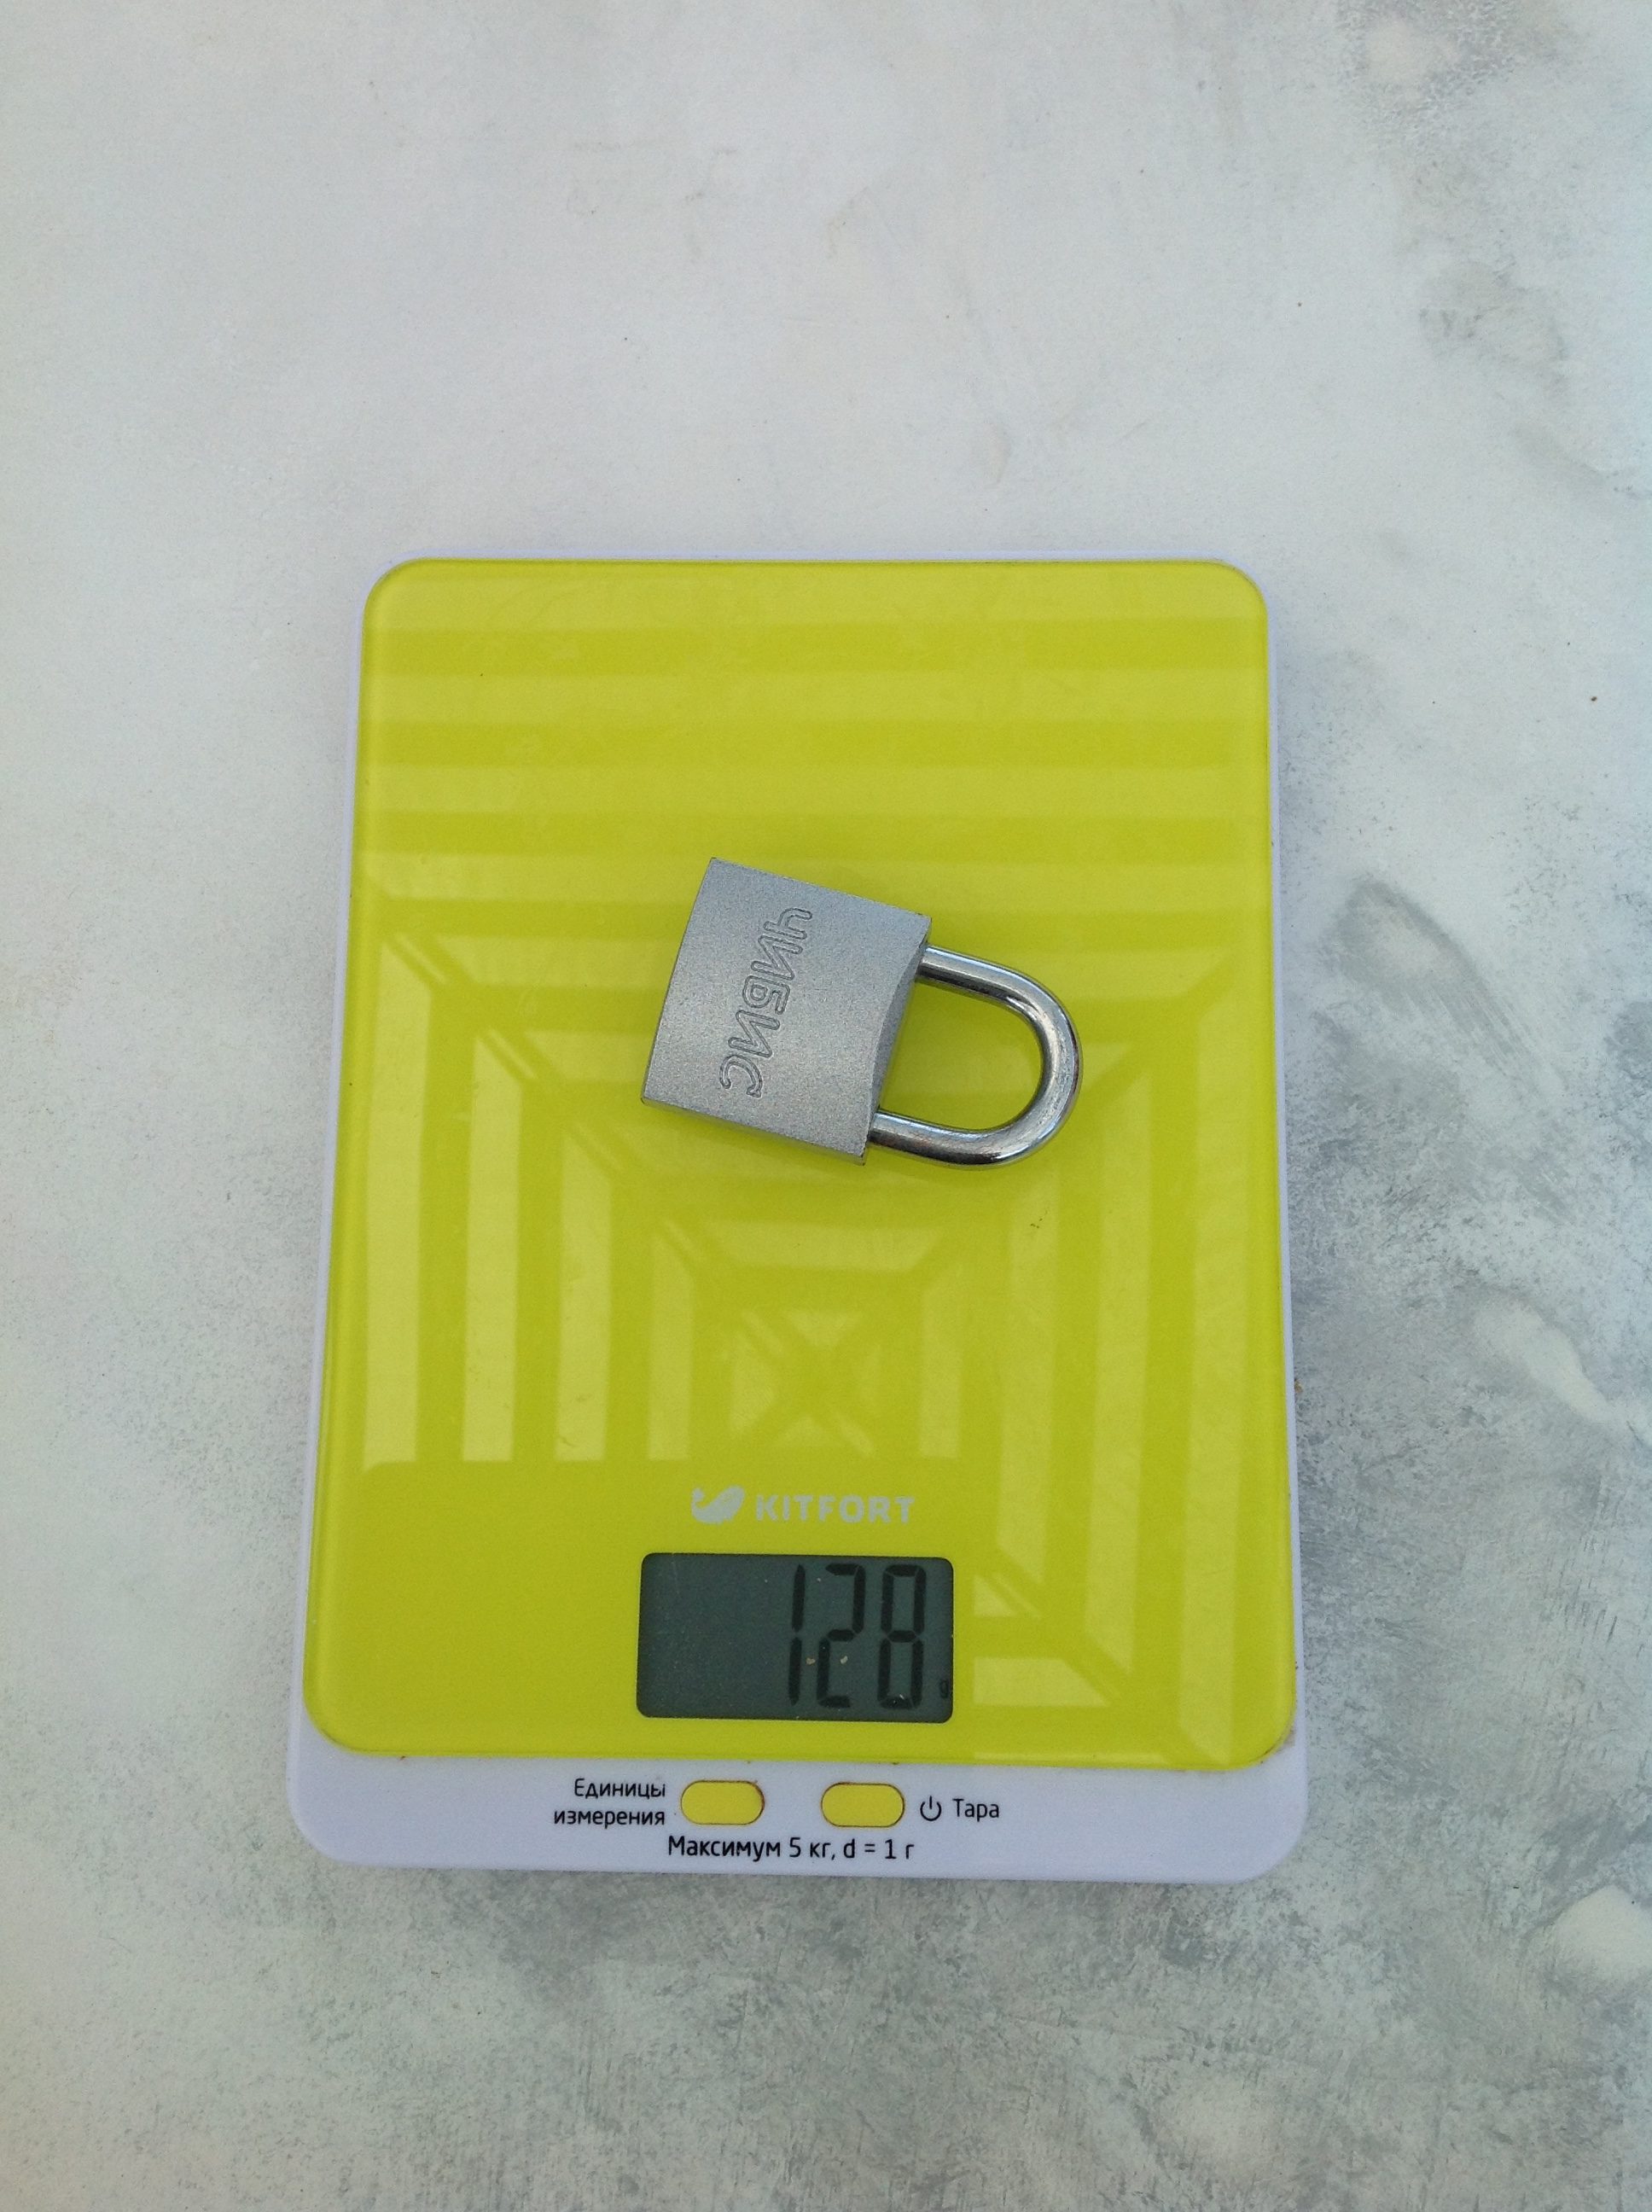 small padlock weight